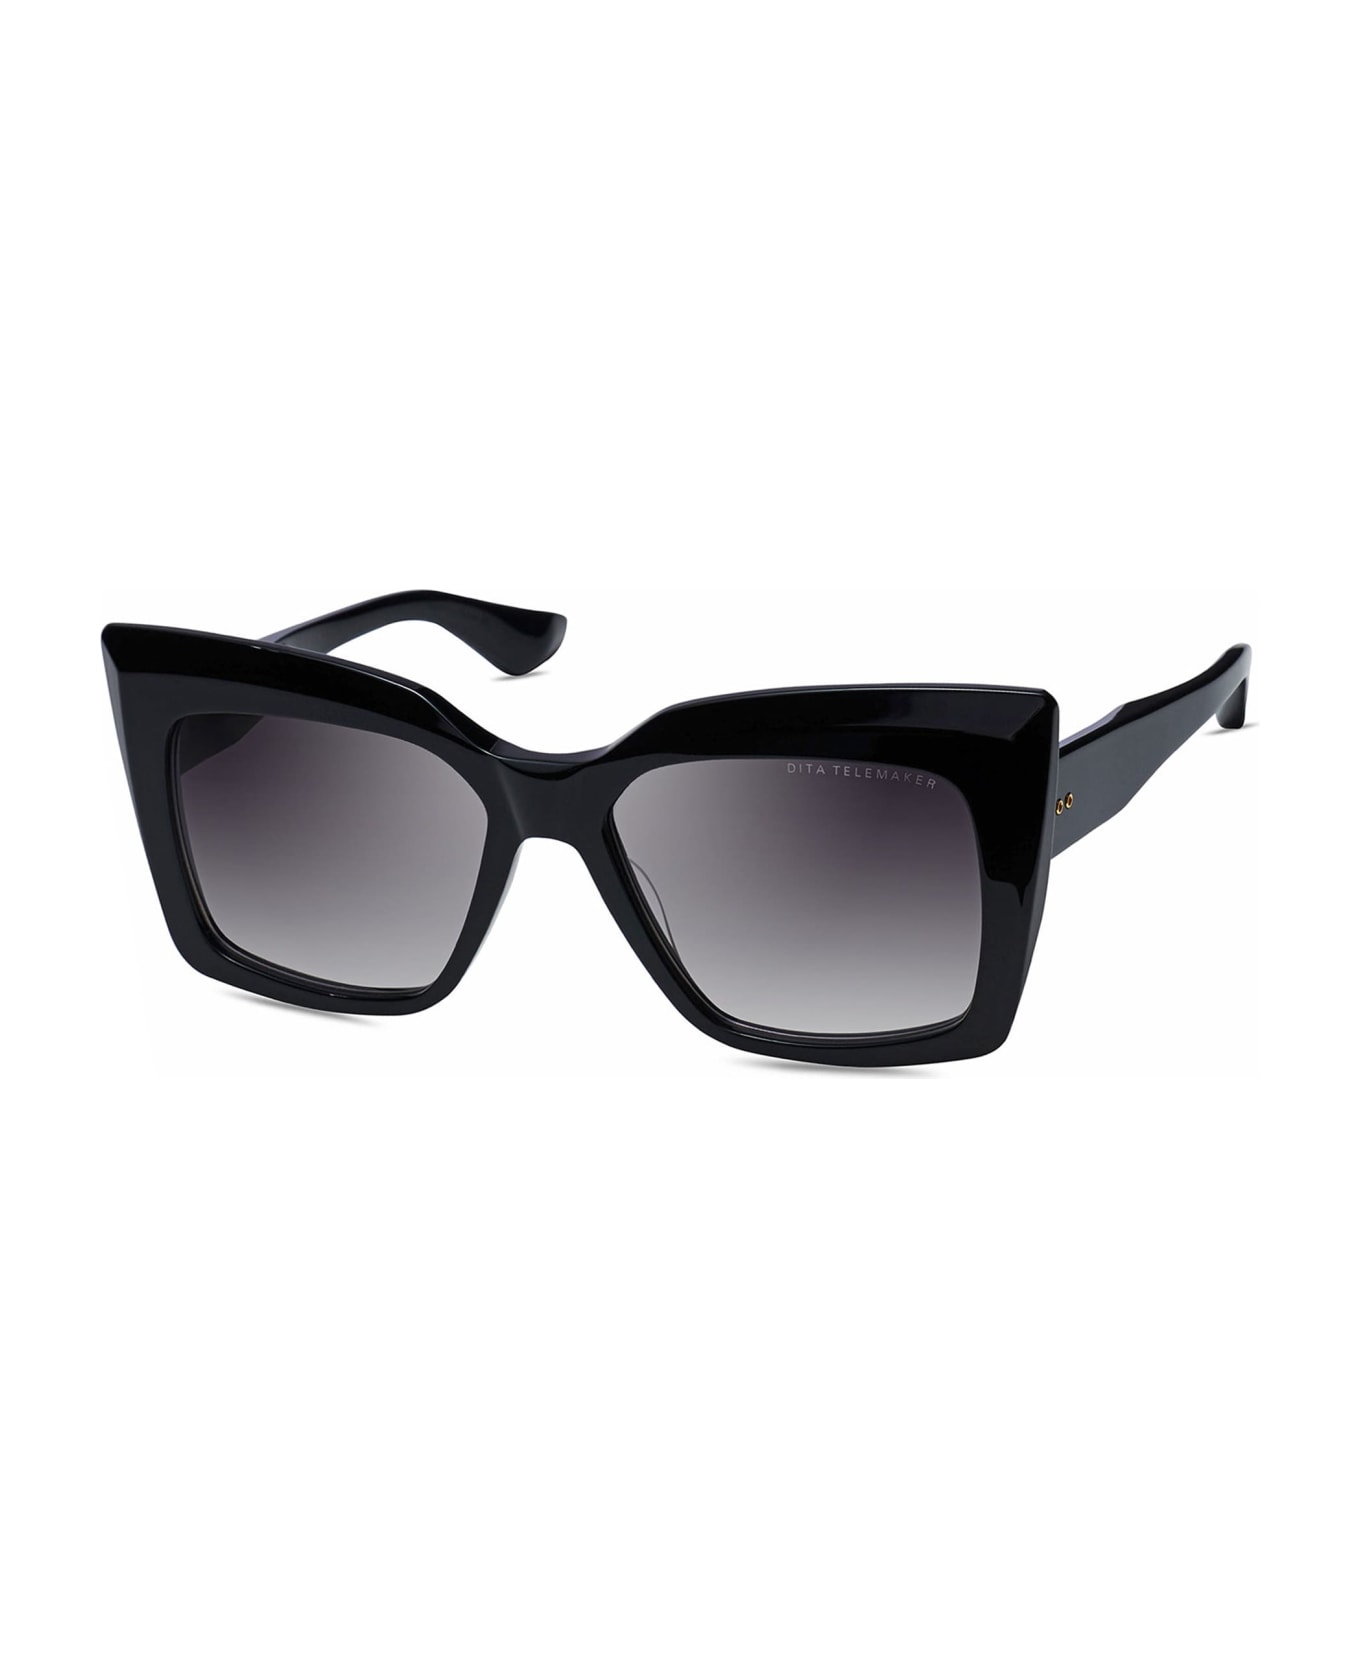 Dita Telemaker - Black Sunglasses - Black